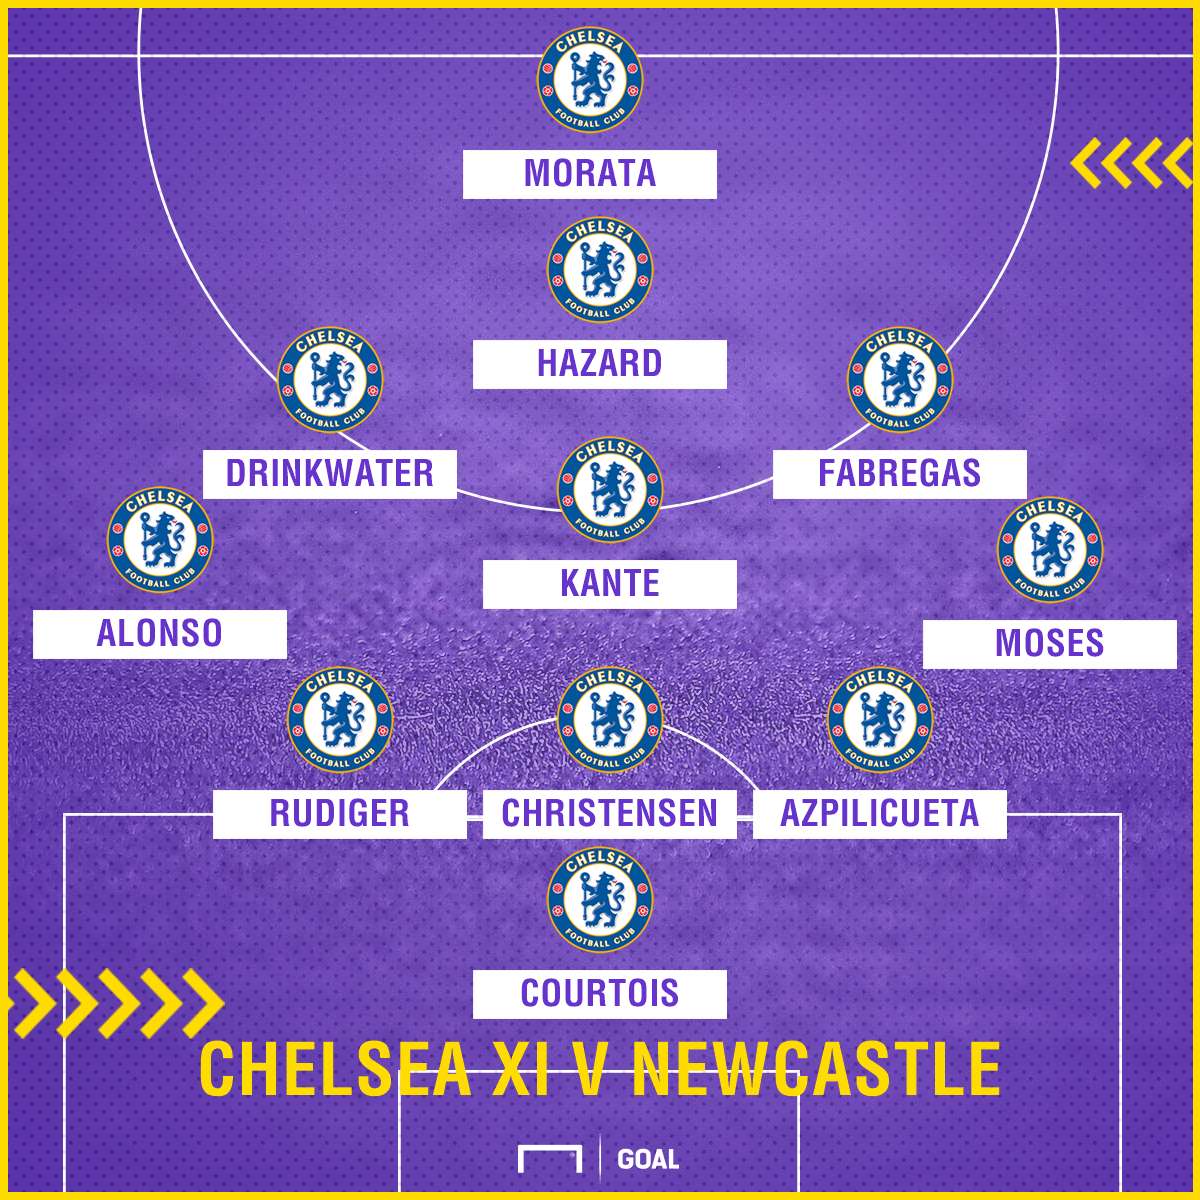 Chelsea XI vs Newcastle 02/12/17